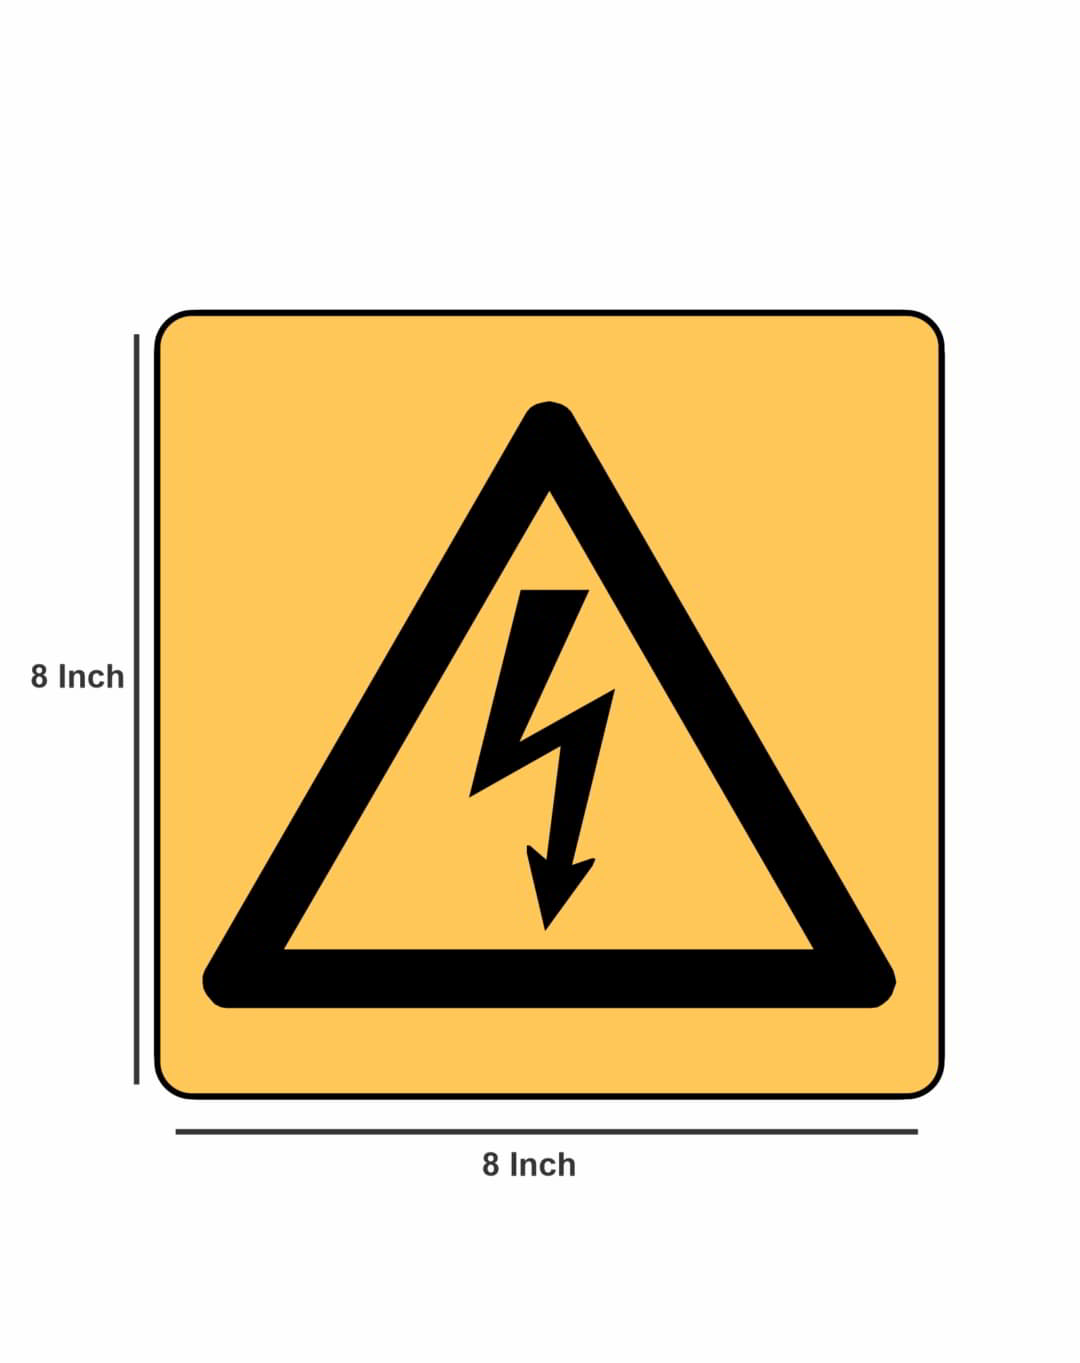 Safety Sign Sticker Board(2pc)_c93